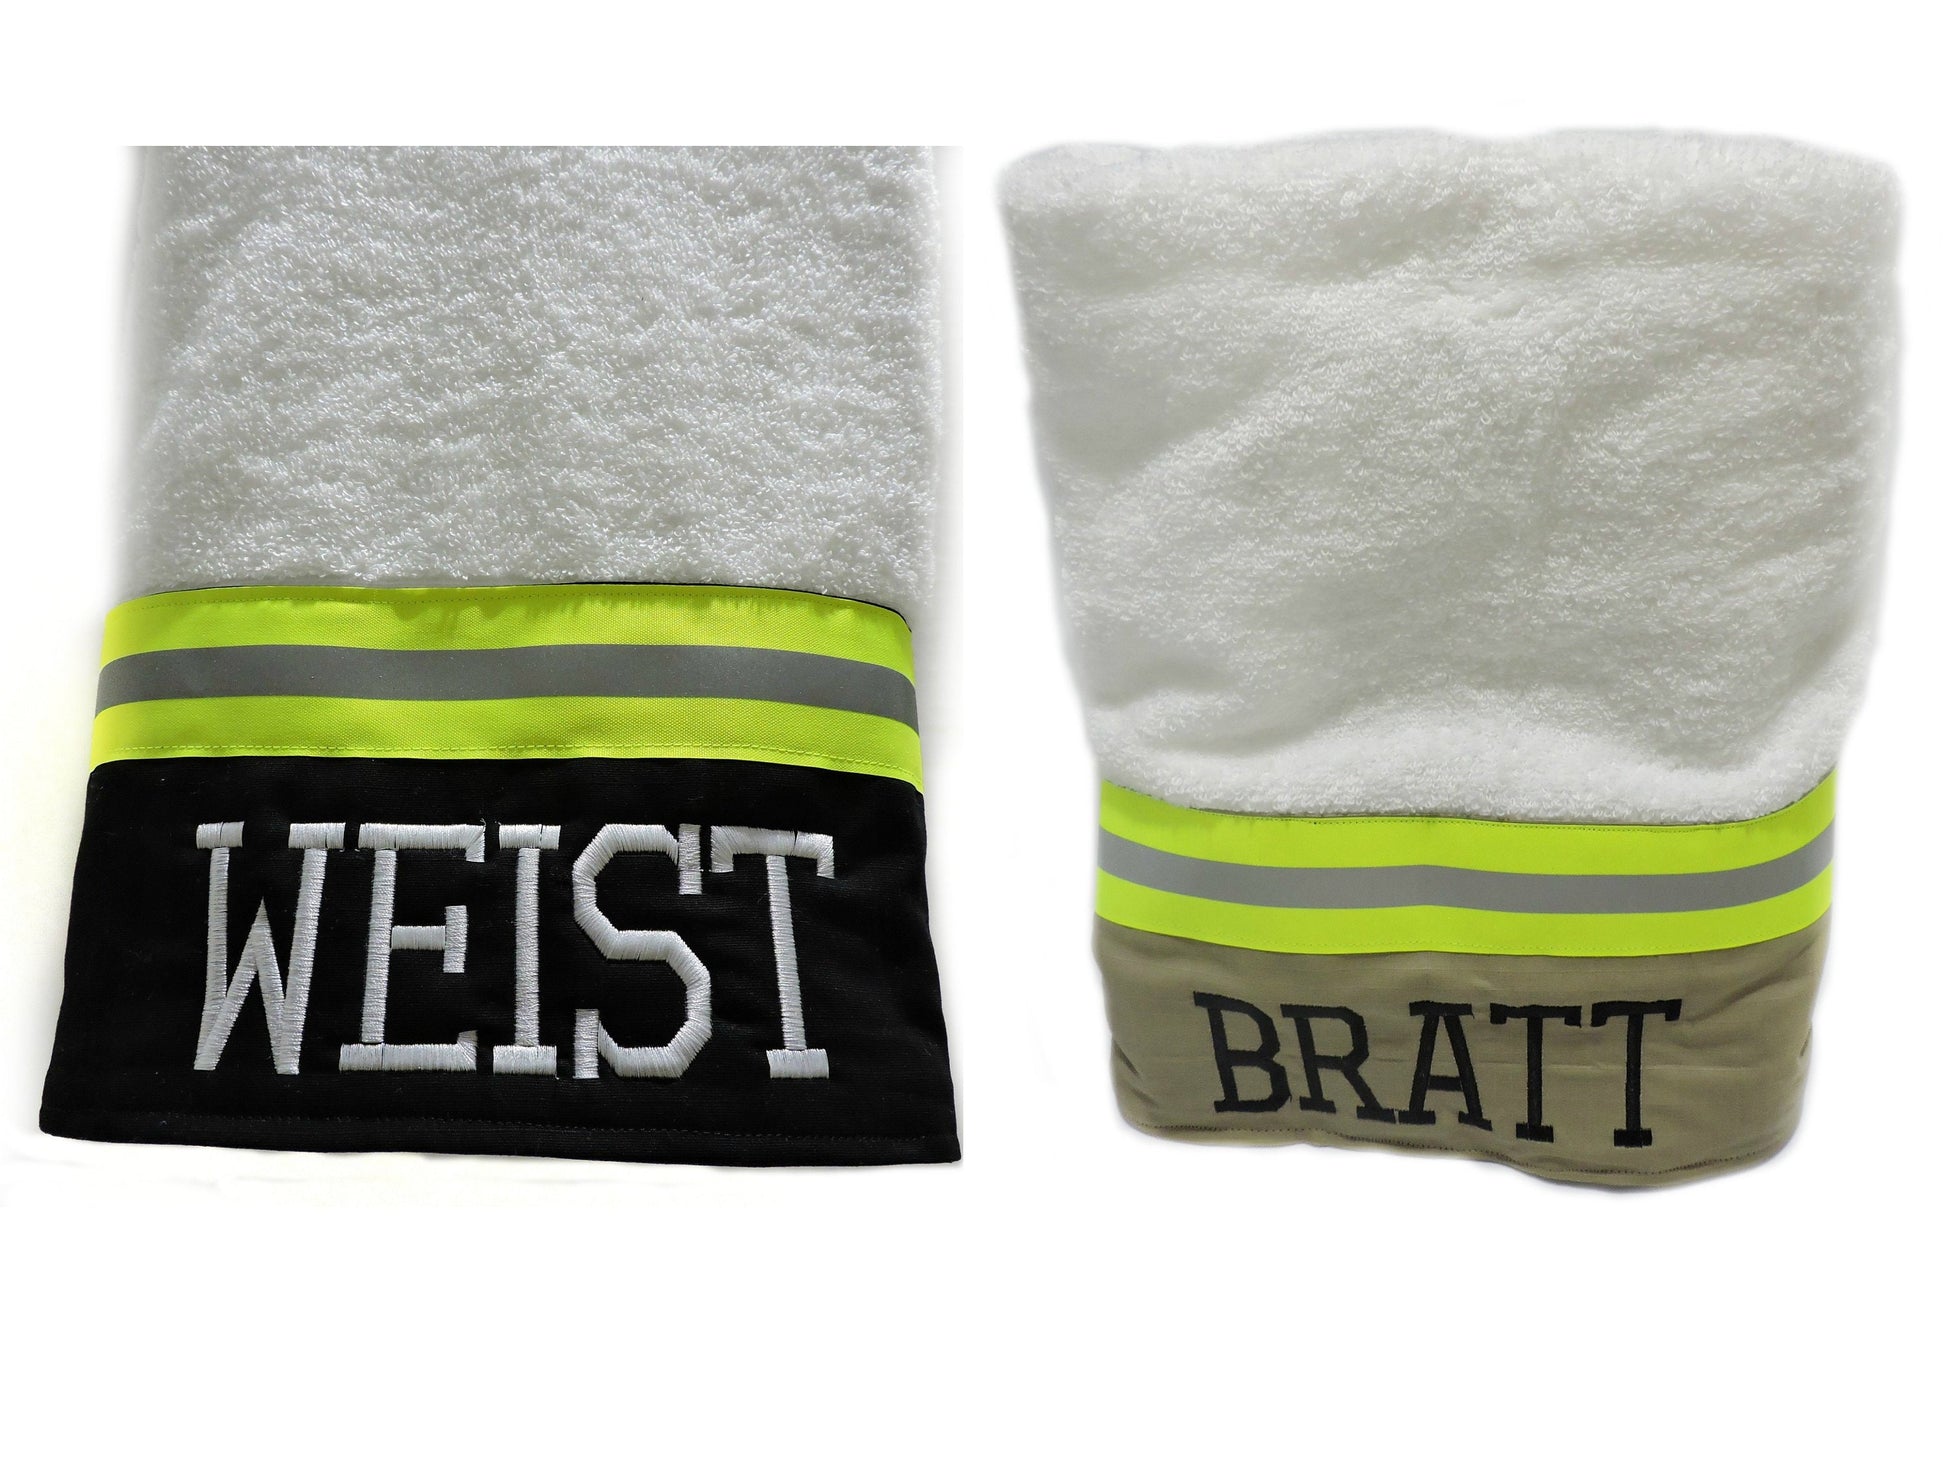 Firefighter bath towel